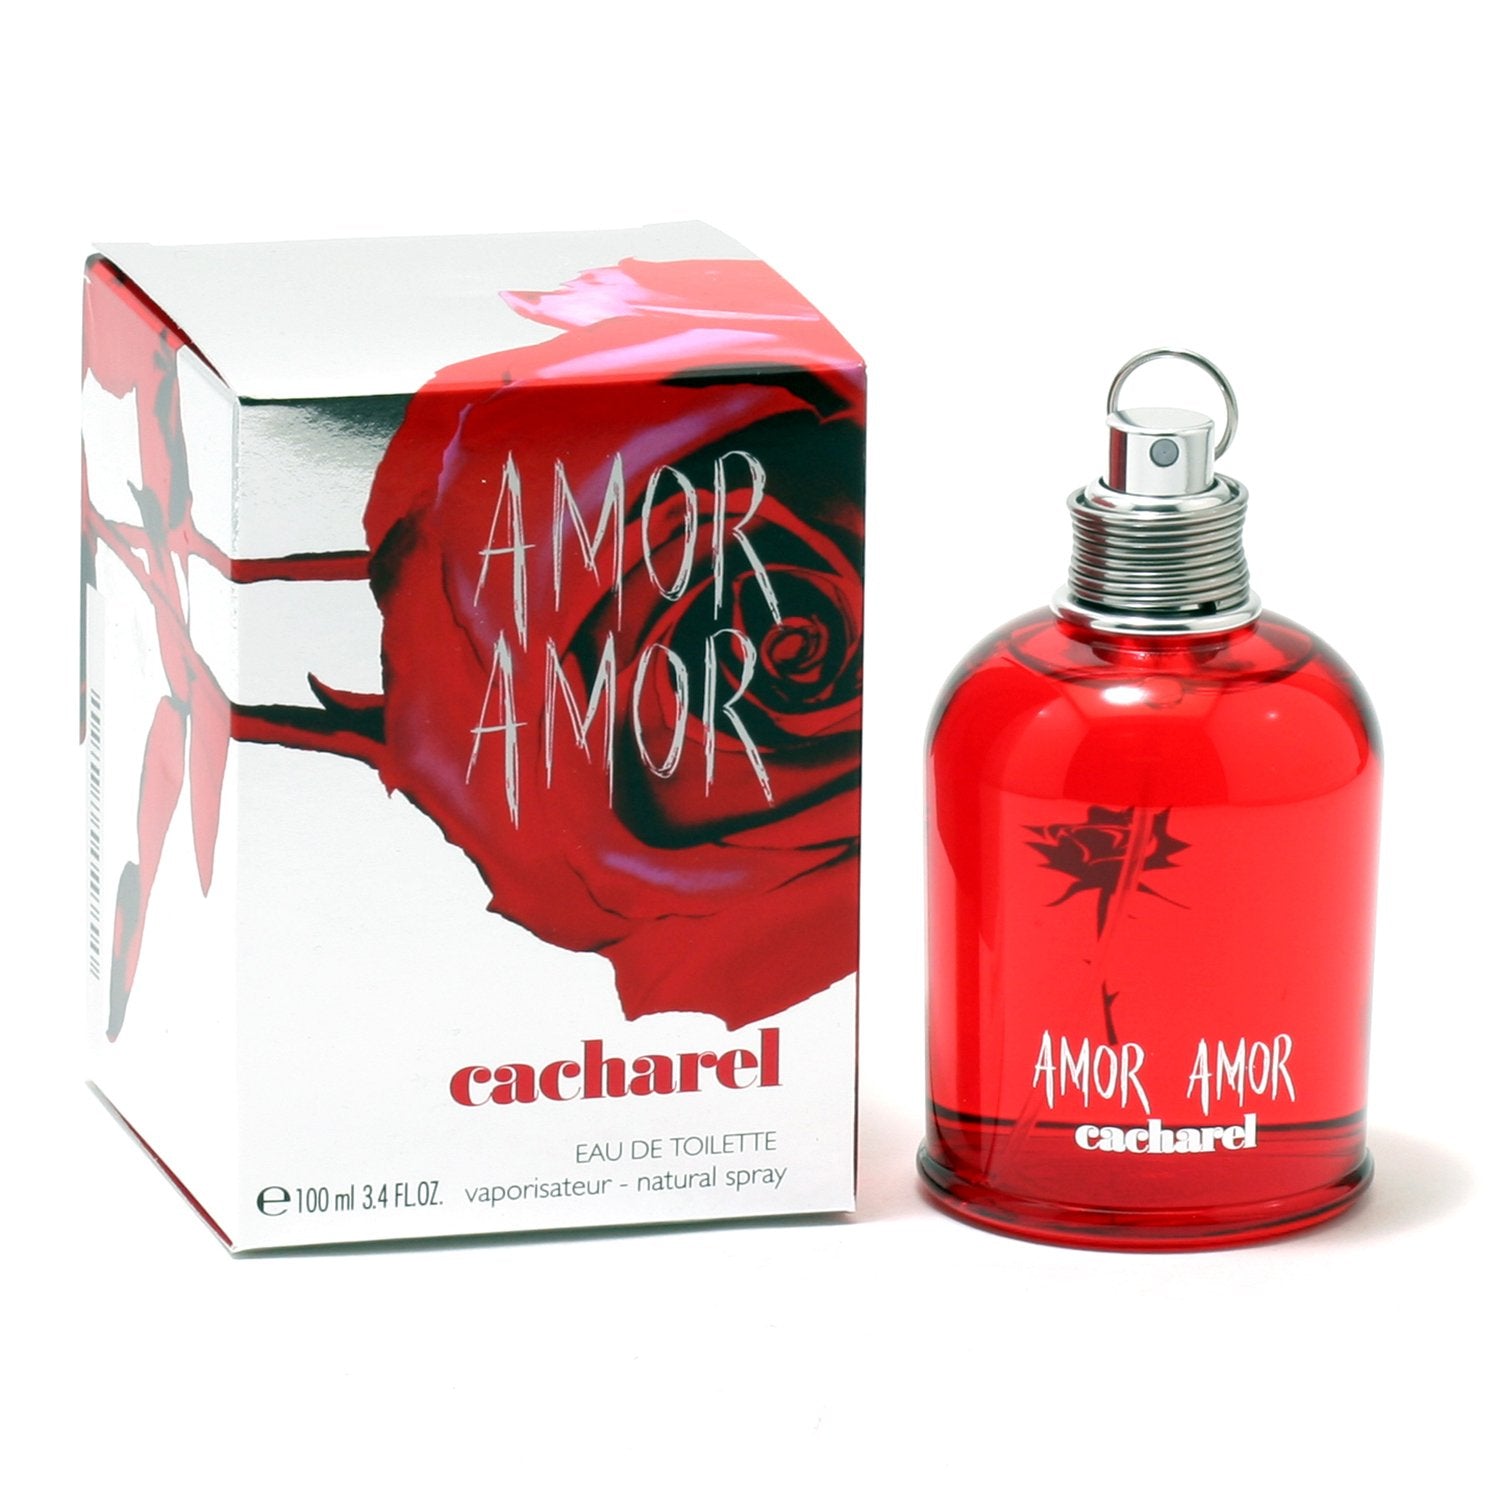 Perfume - AMOR AMOR FOR WOMEN BY CACHAREL - EAU DE TOILETTE SPRAY